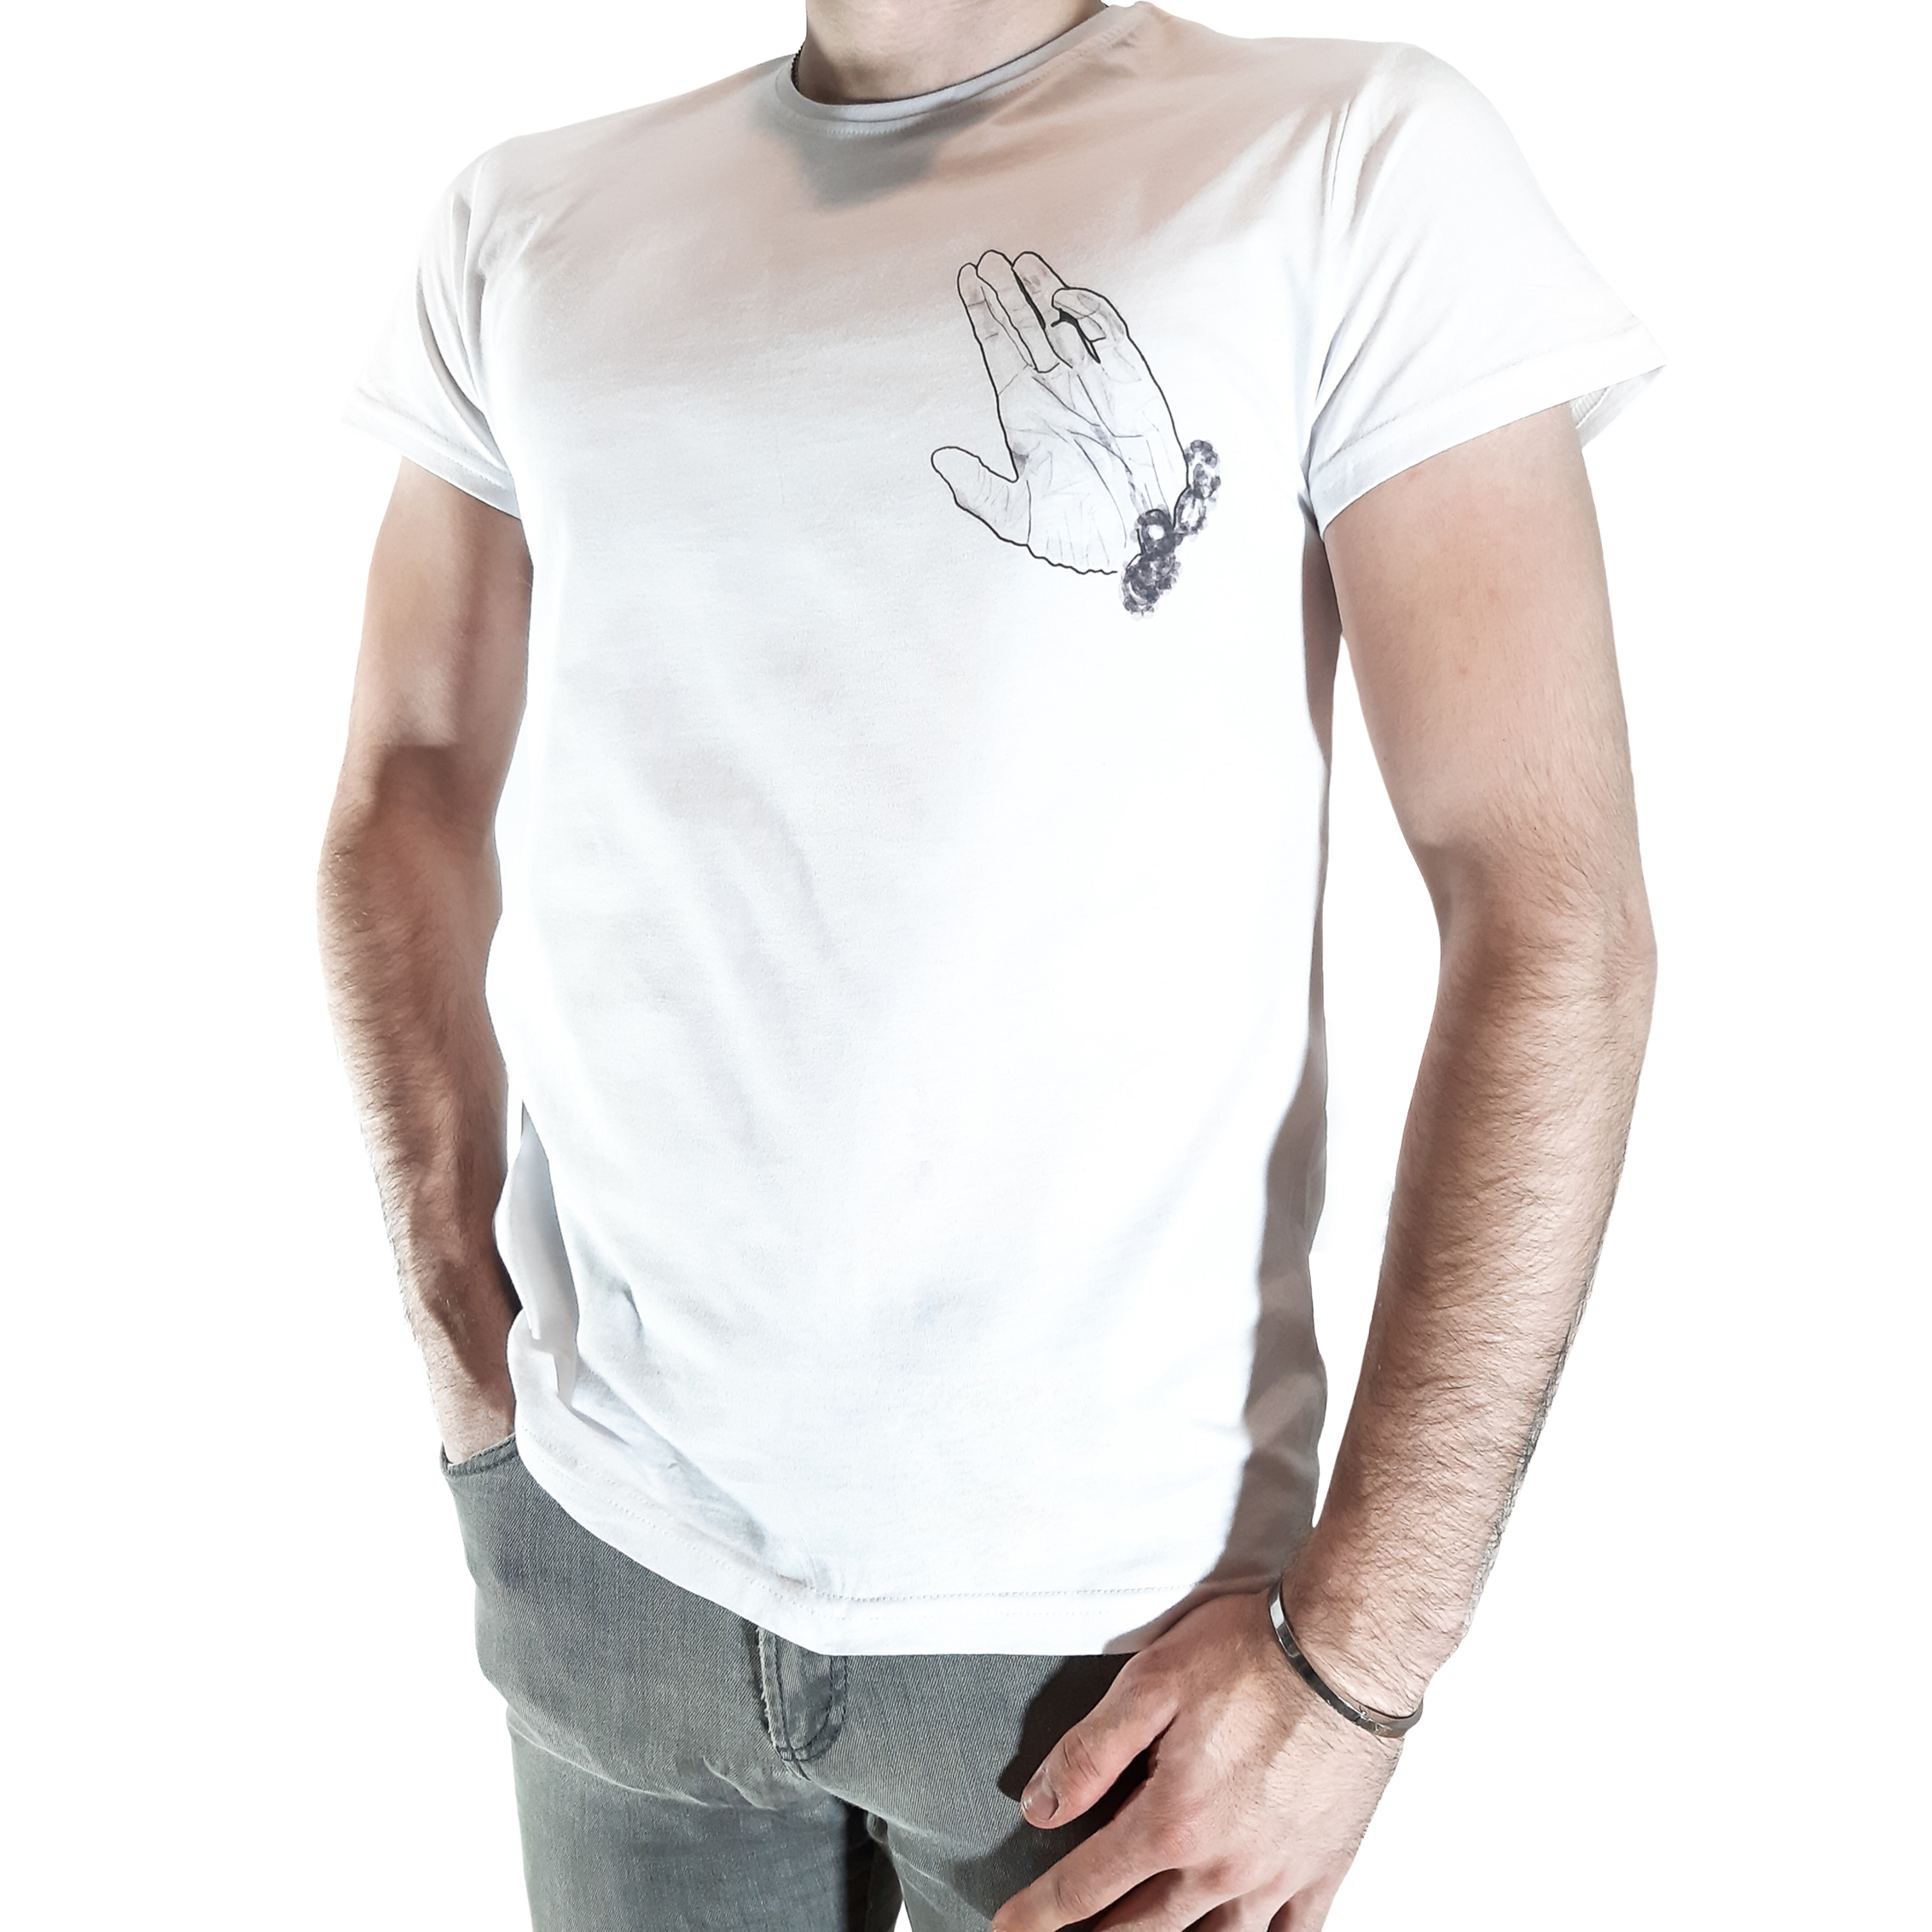 Tuo - Classic Series T-Shirt - El Tasarım Unisex Tişört